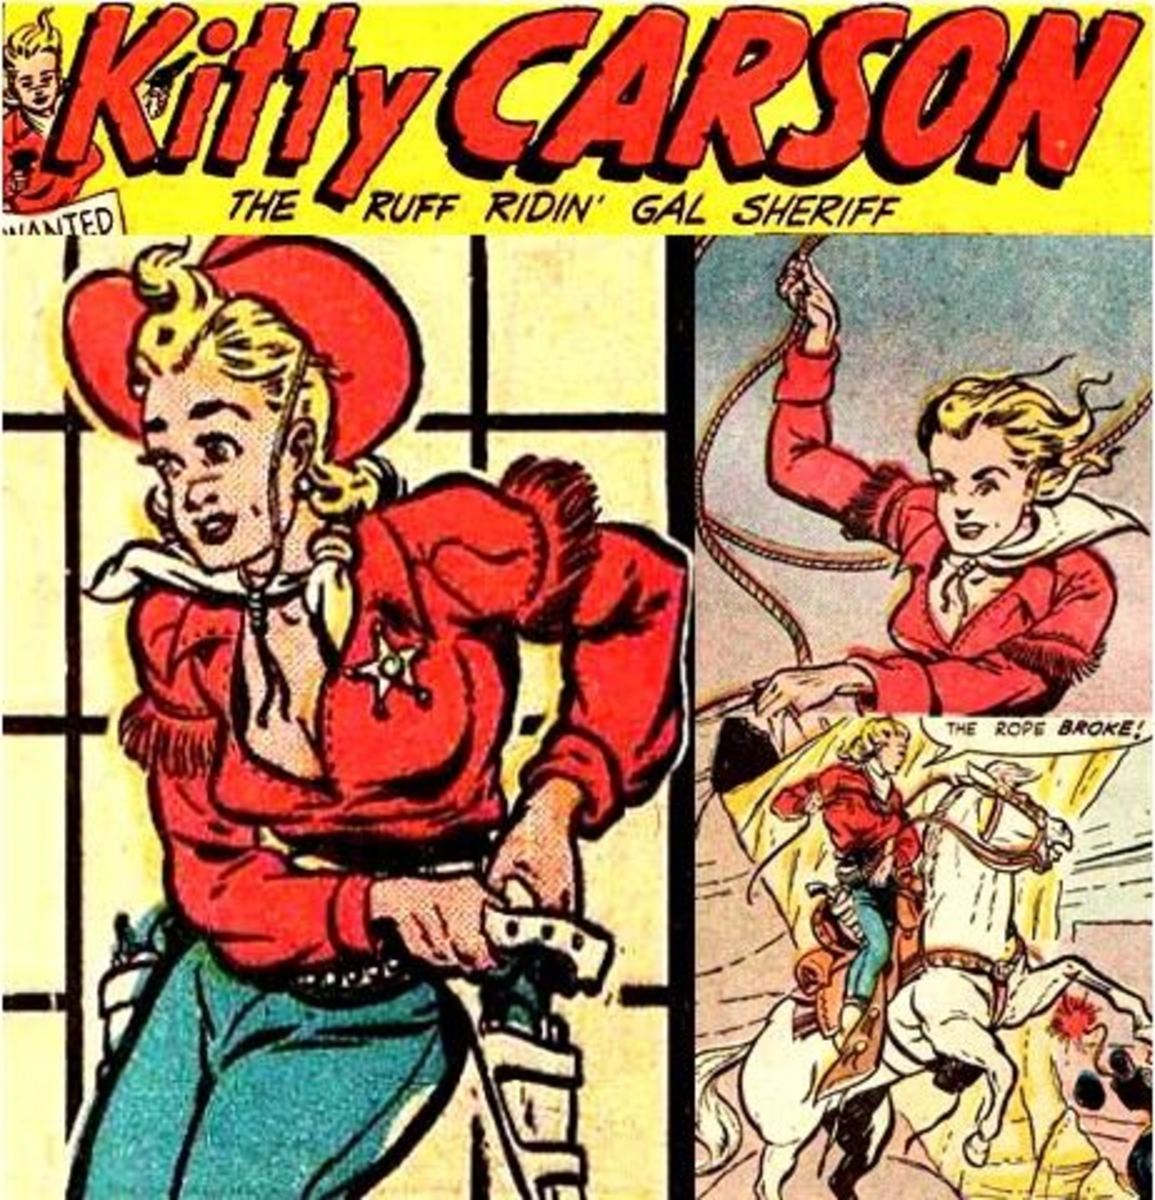 Kitty Carson